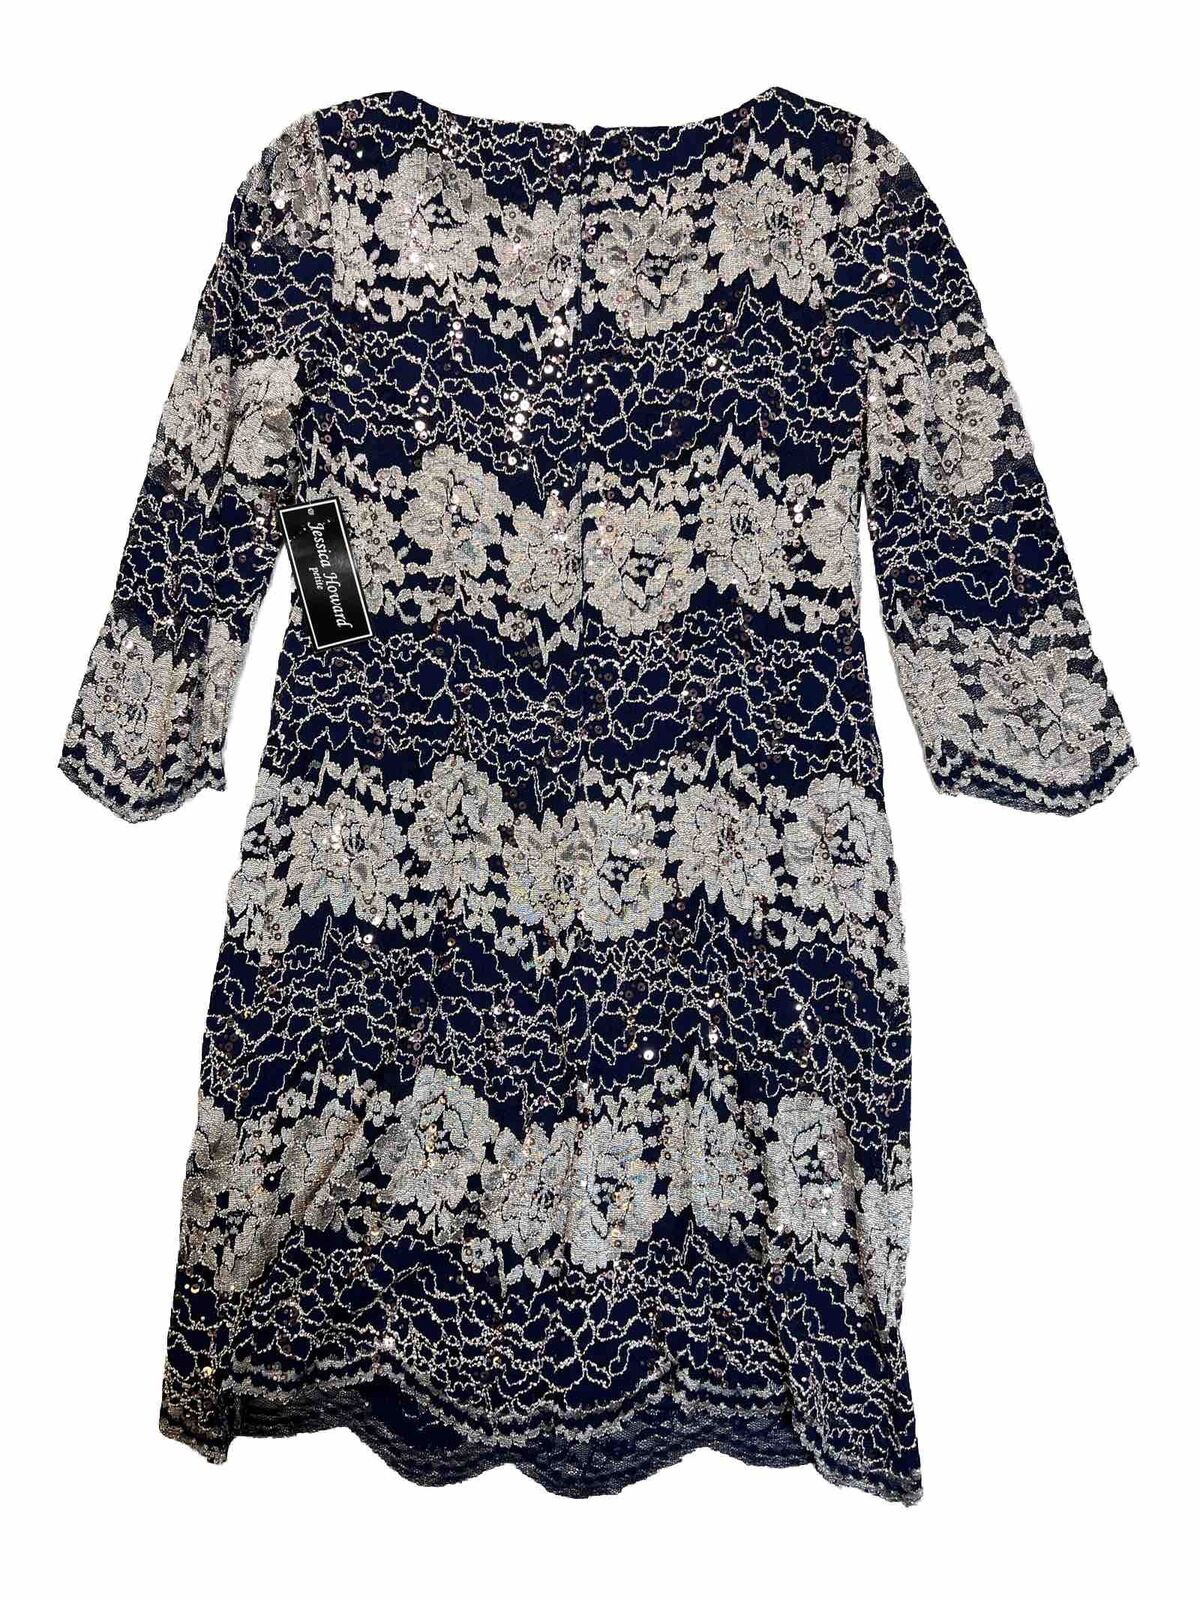 NEW Jessica Howard Women's Blue Sequin Lace Sheath Dress - Petite 6P